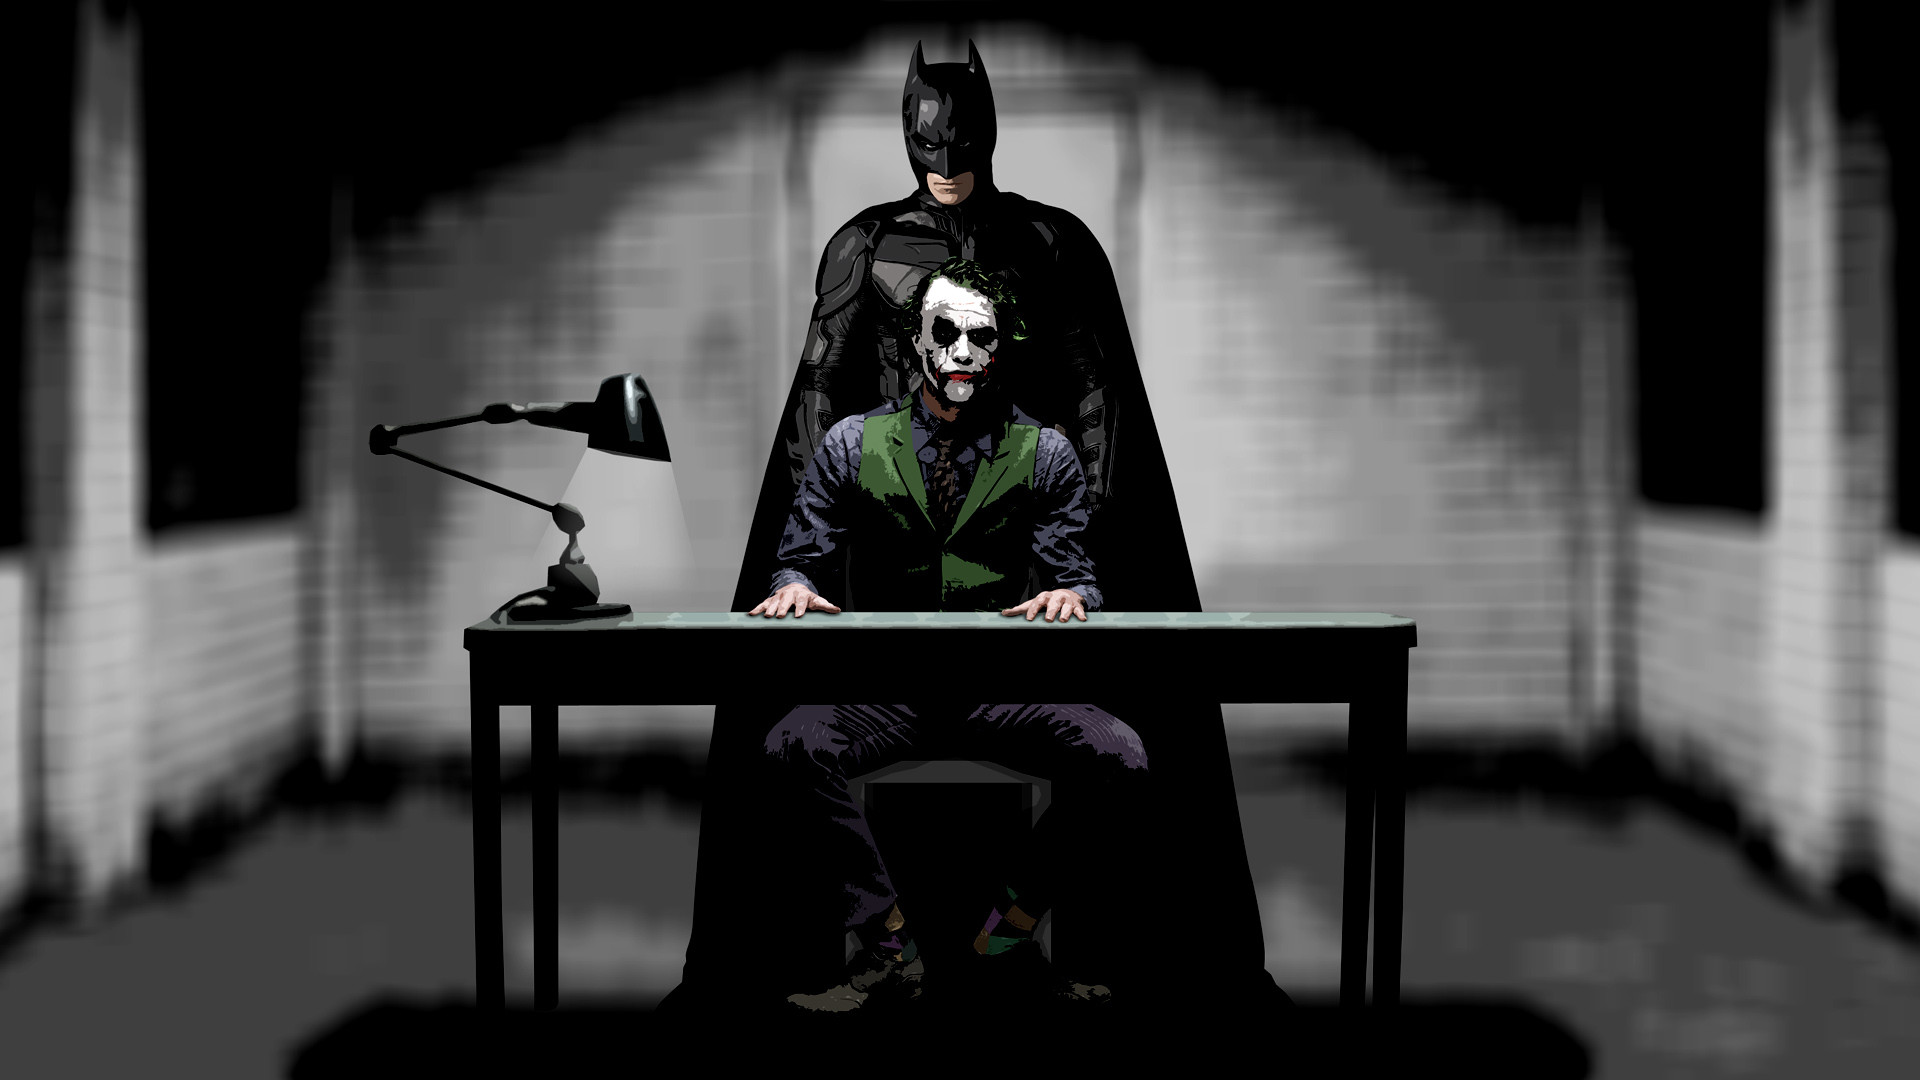 Download 21 batman-wallpaper-hd-1080p 1920x1080-Batman-8K-Logo-1080P-Laptop-Full-HD-Wallpaper-HD-.jpg